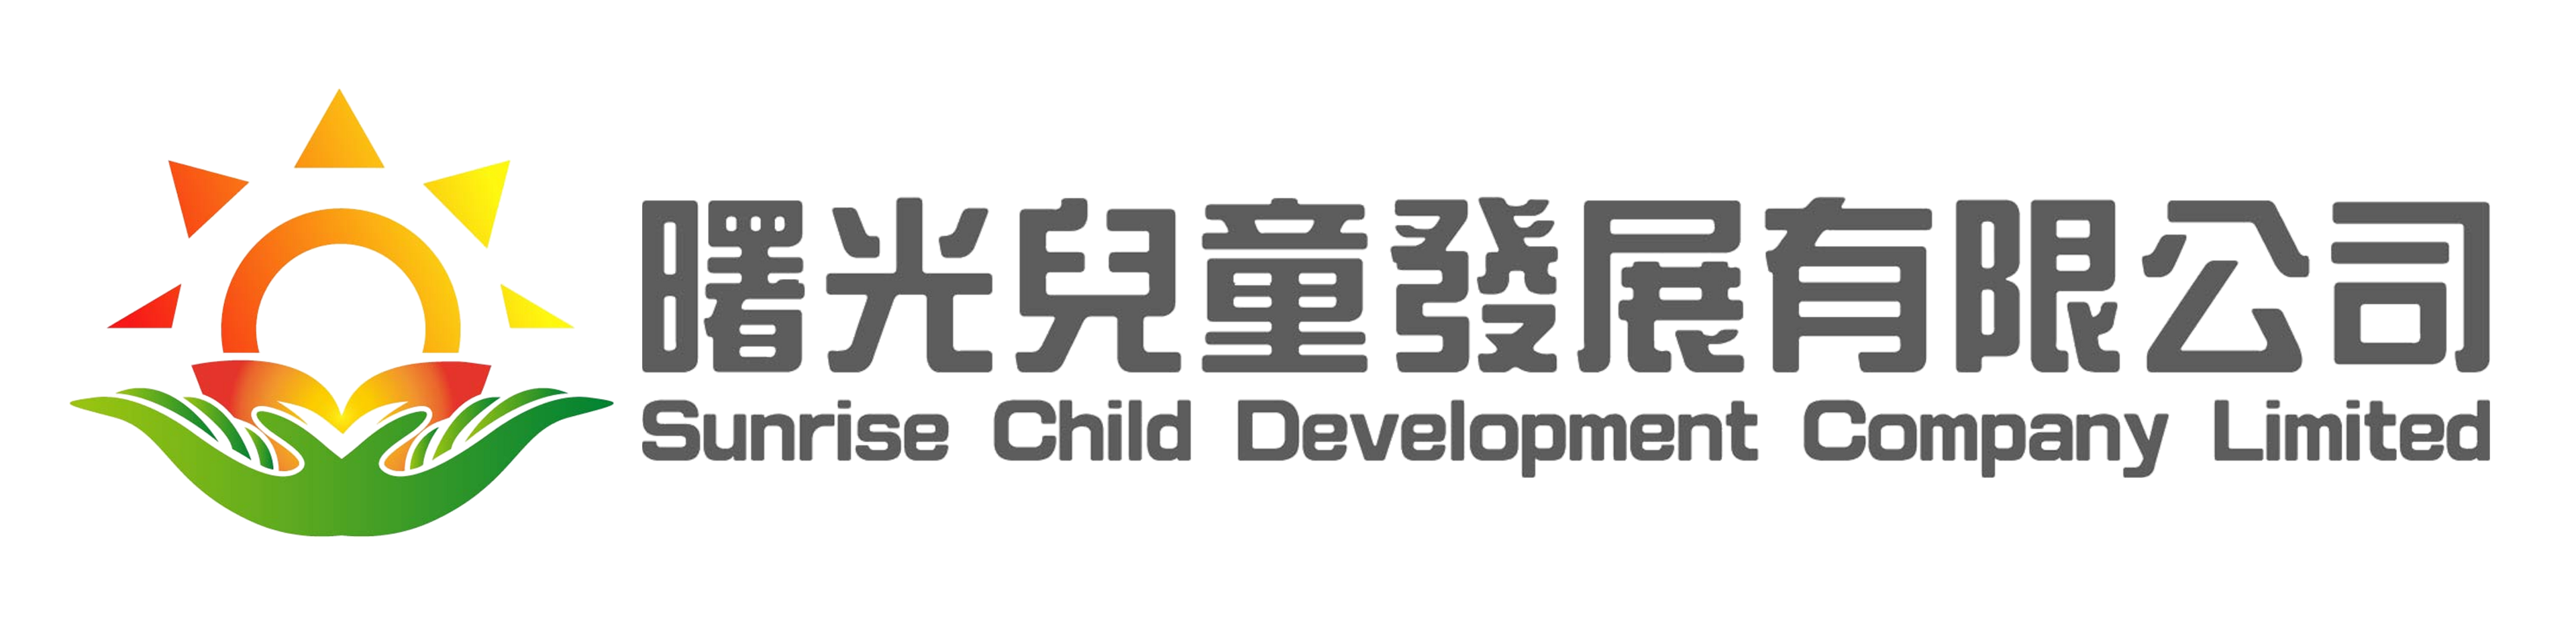 Sunrise Child Development Centre